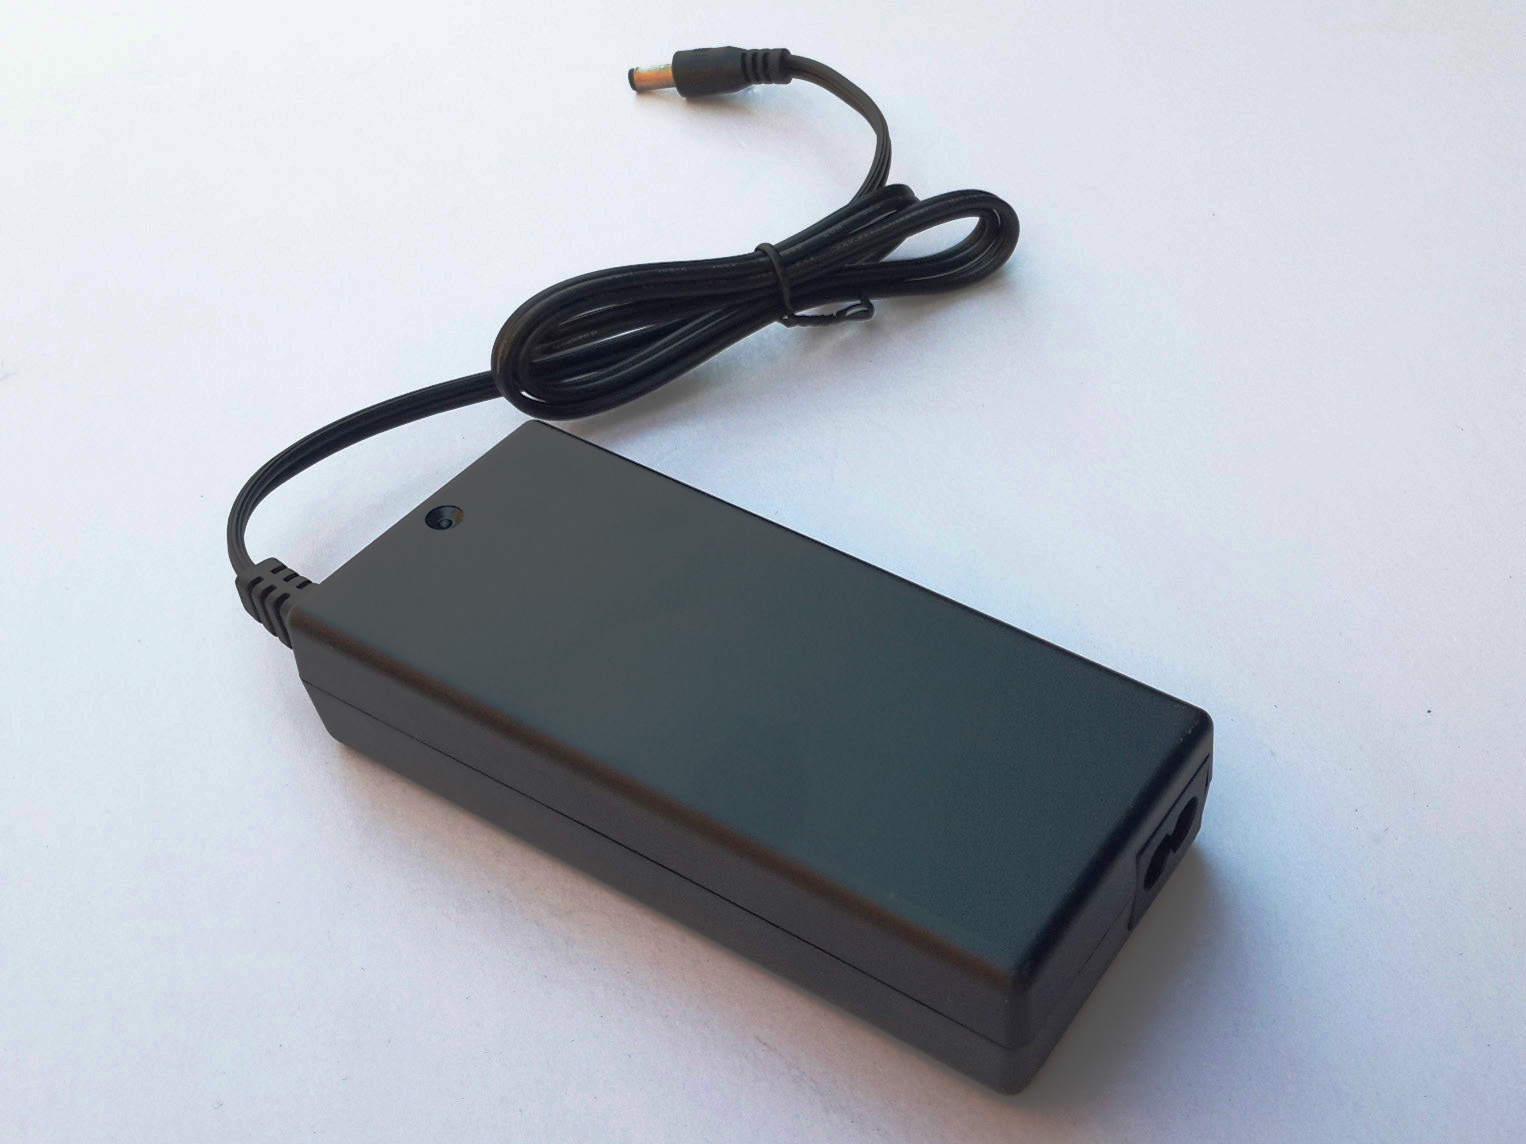 Hot sale 58.8V 1A Li-ion battery charger